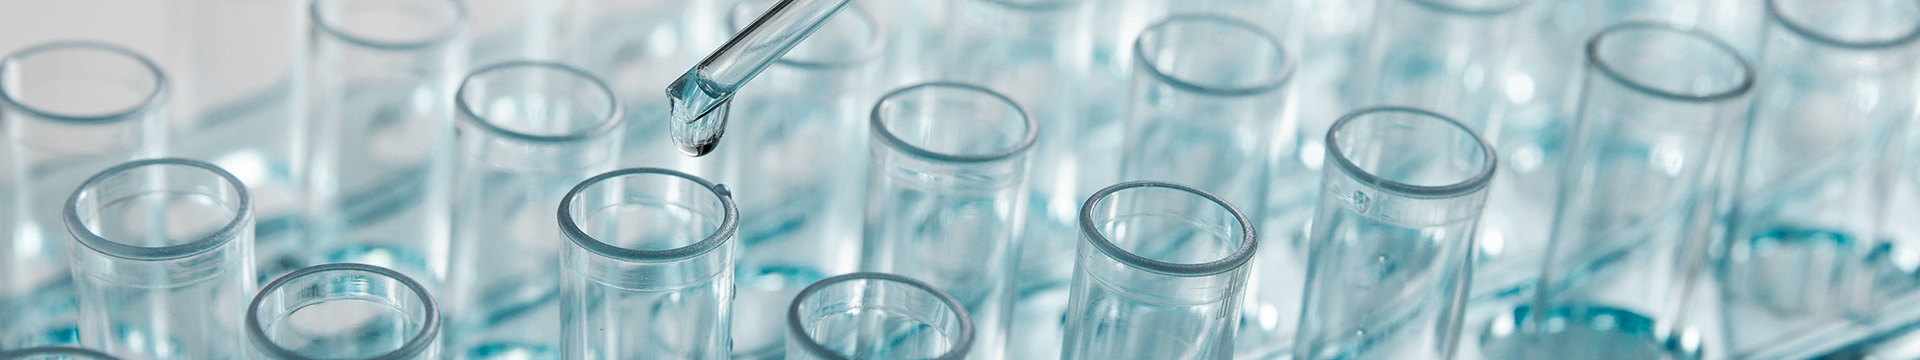 A close-up image of empty glass vials